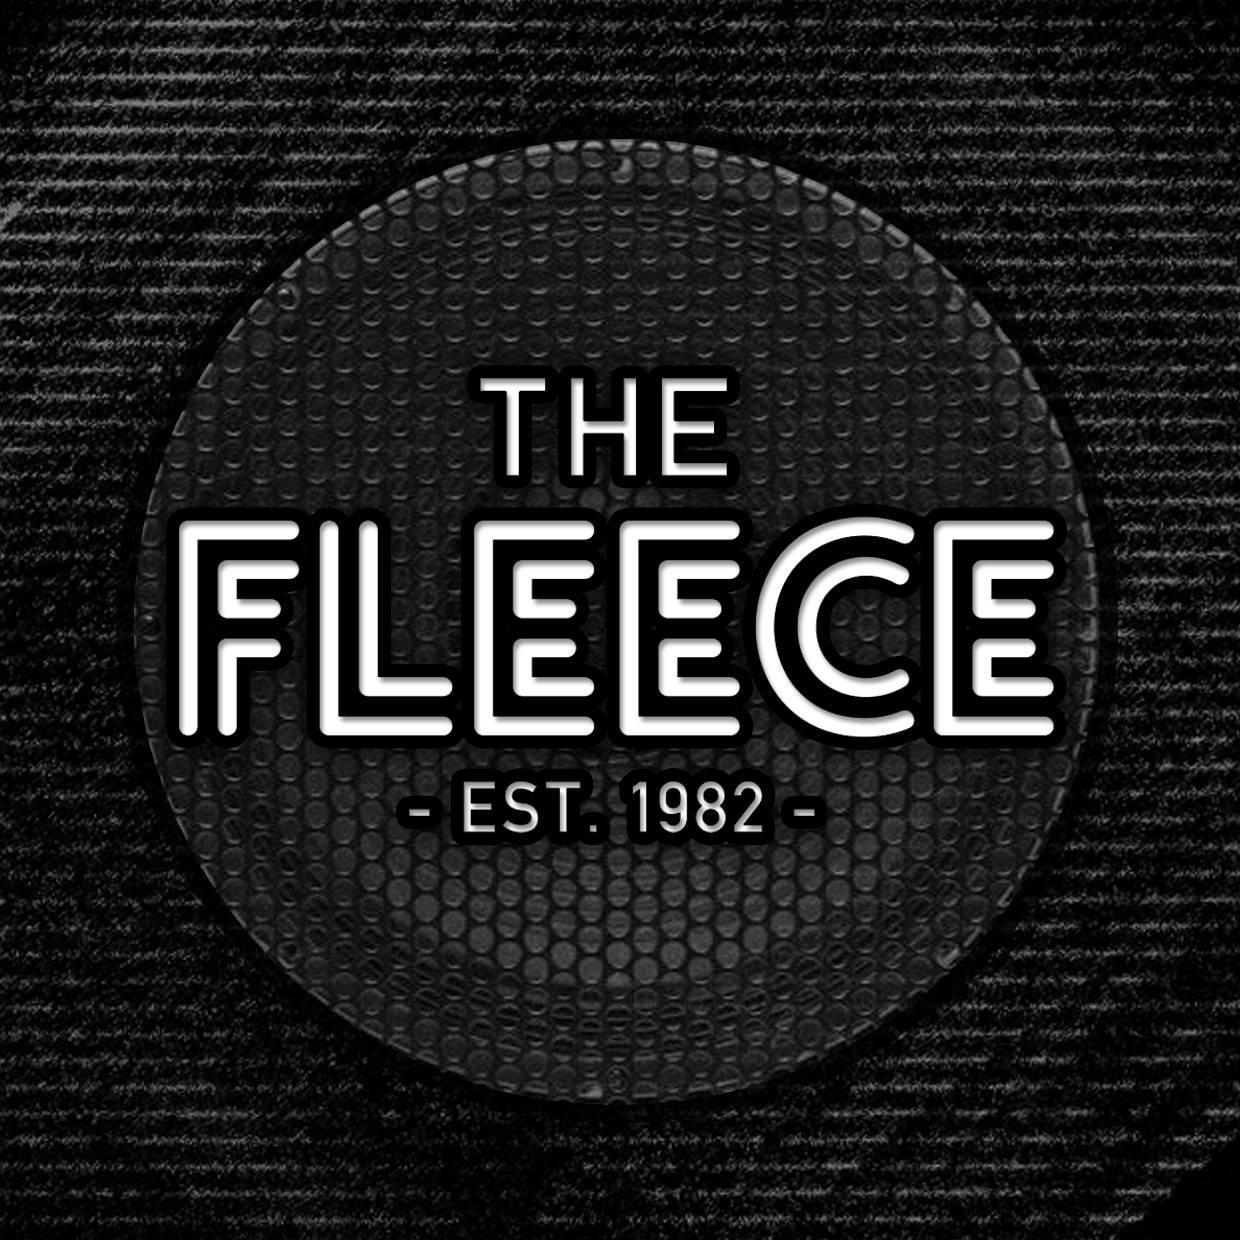 Metallica Reloaded at The Fleece Tickets